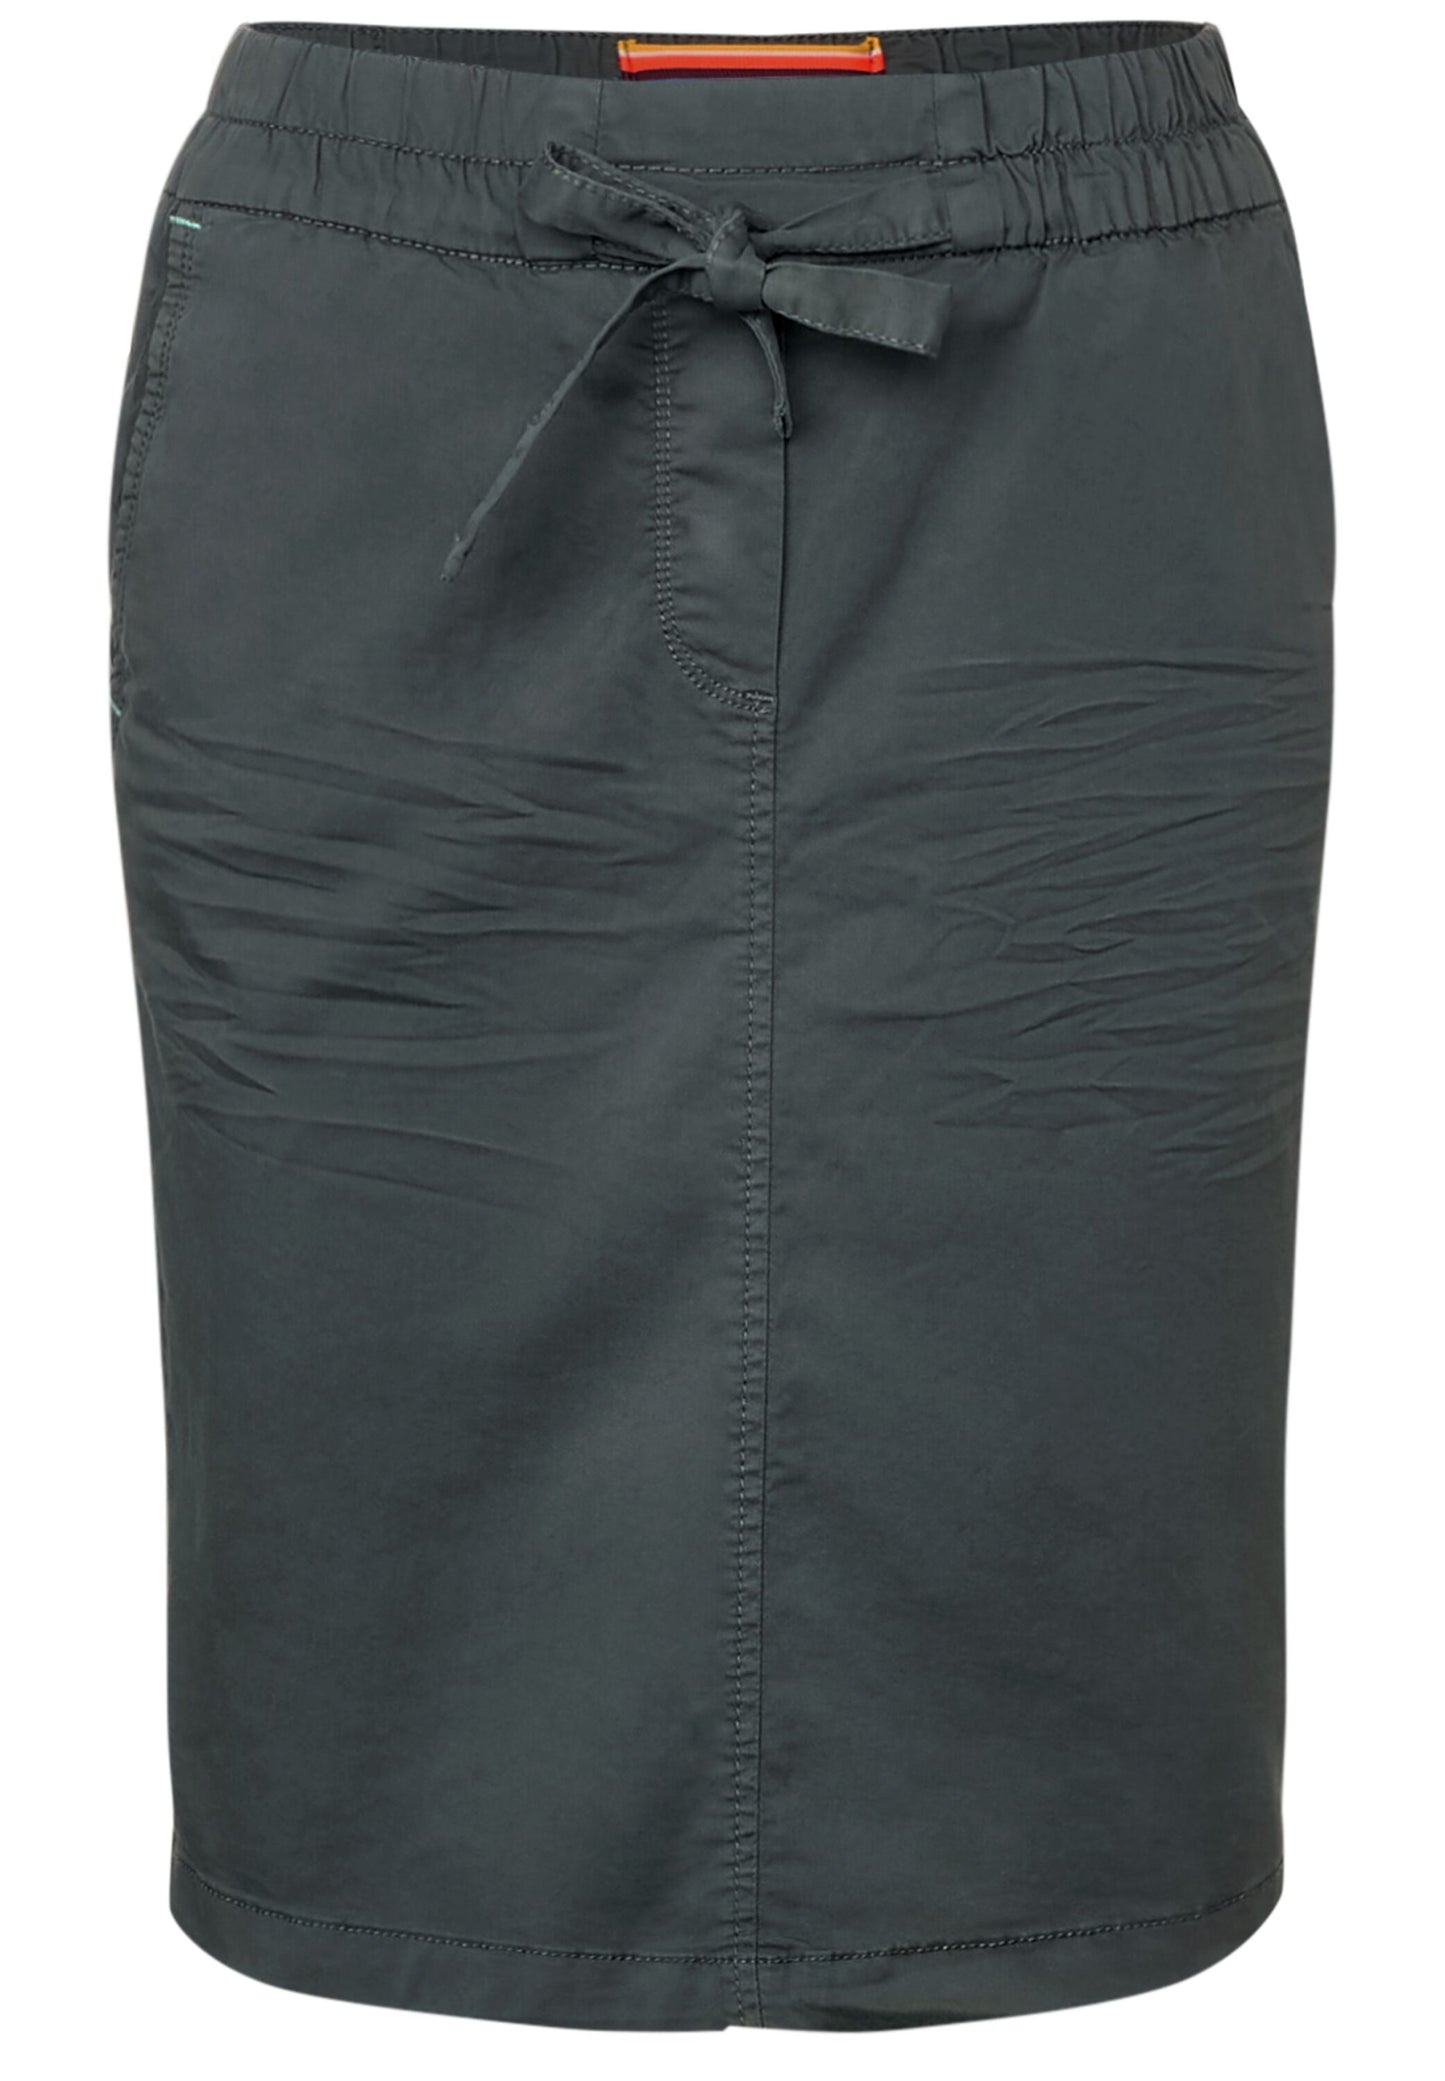 Short fabric skirt in plain color